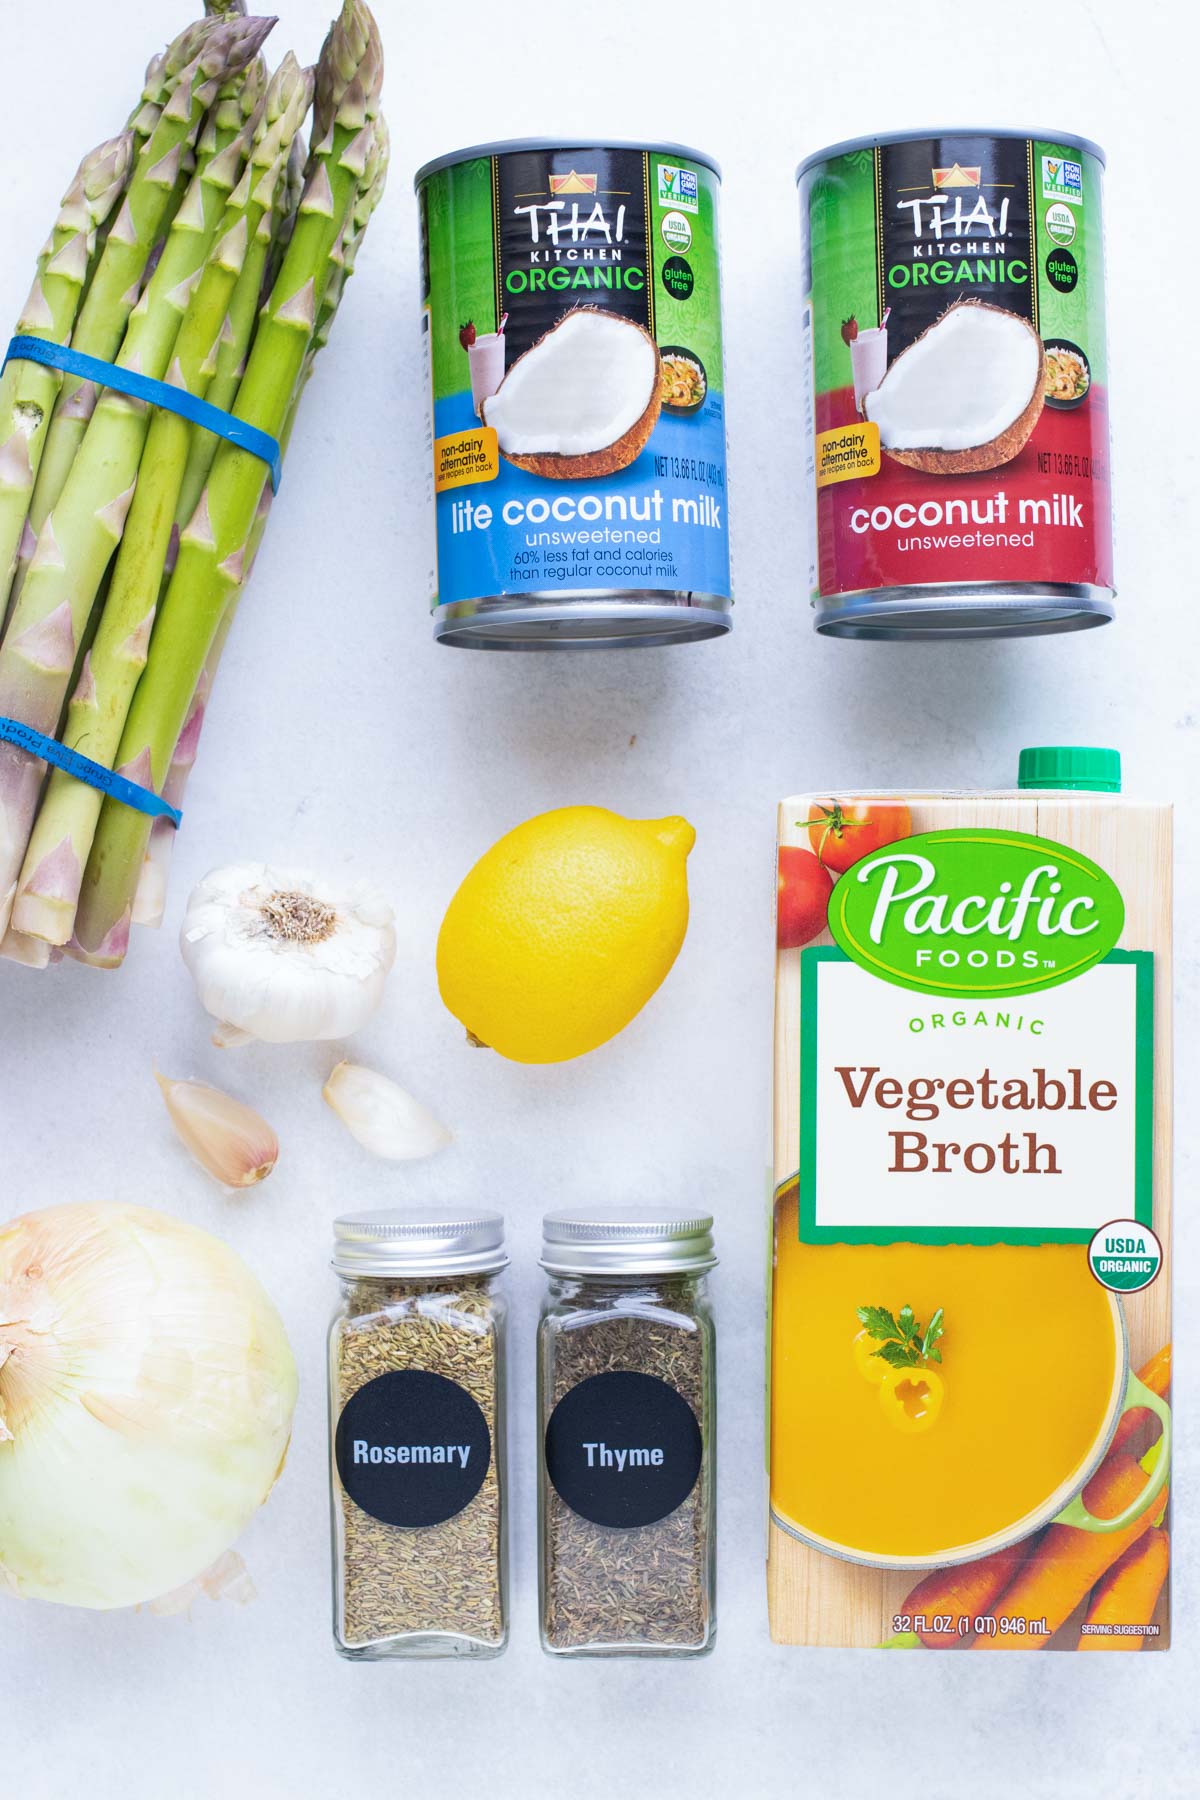 Vegan, Whole30, and Vegetarian asparagus soup recipe ingredients.